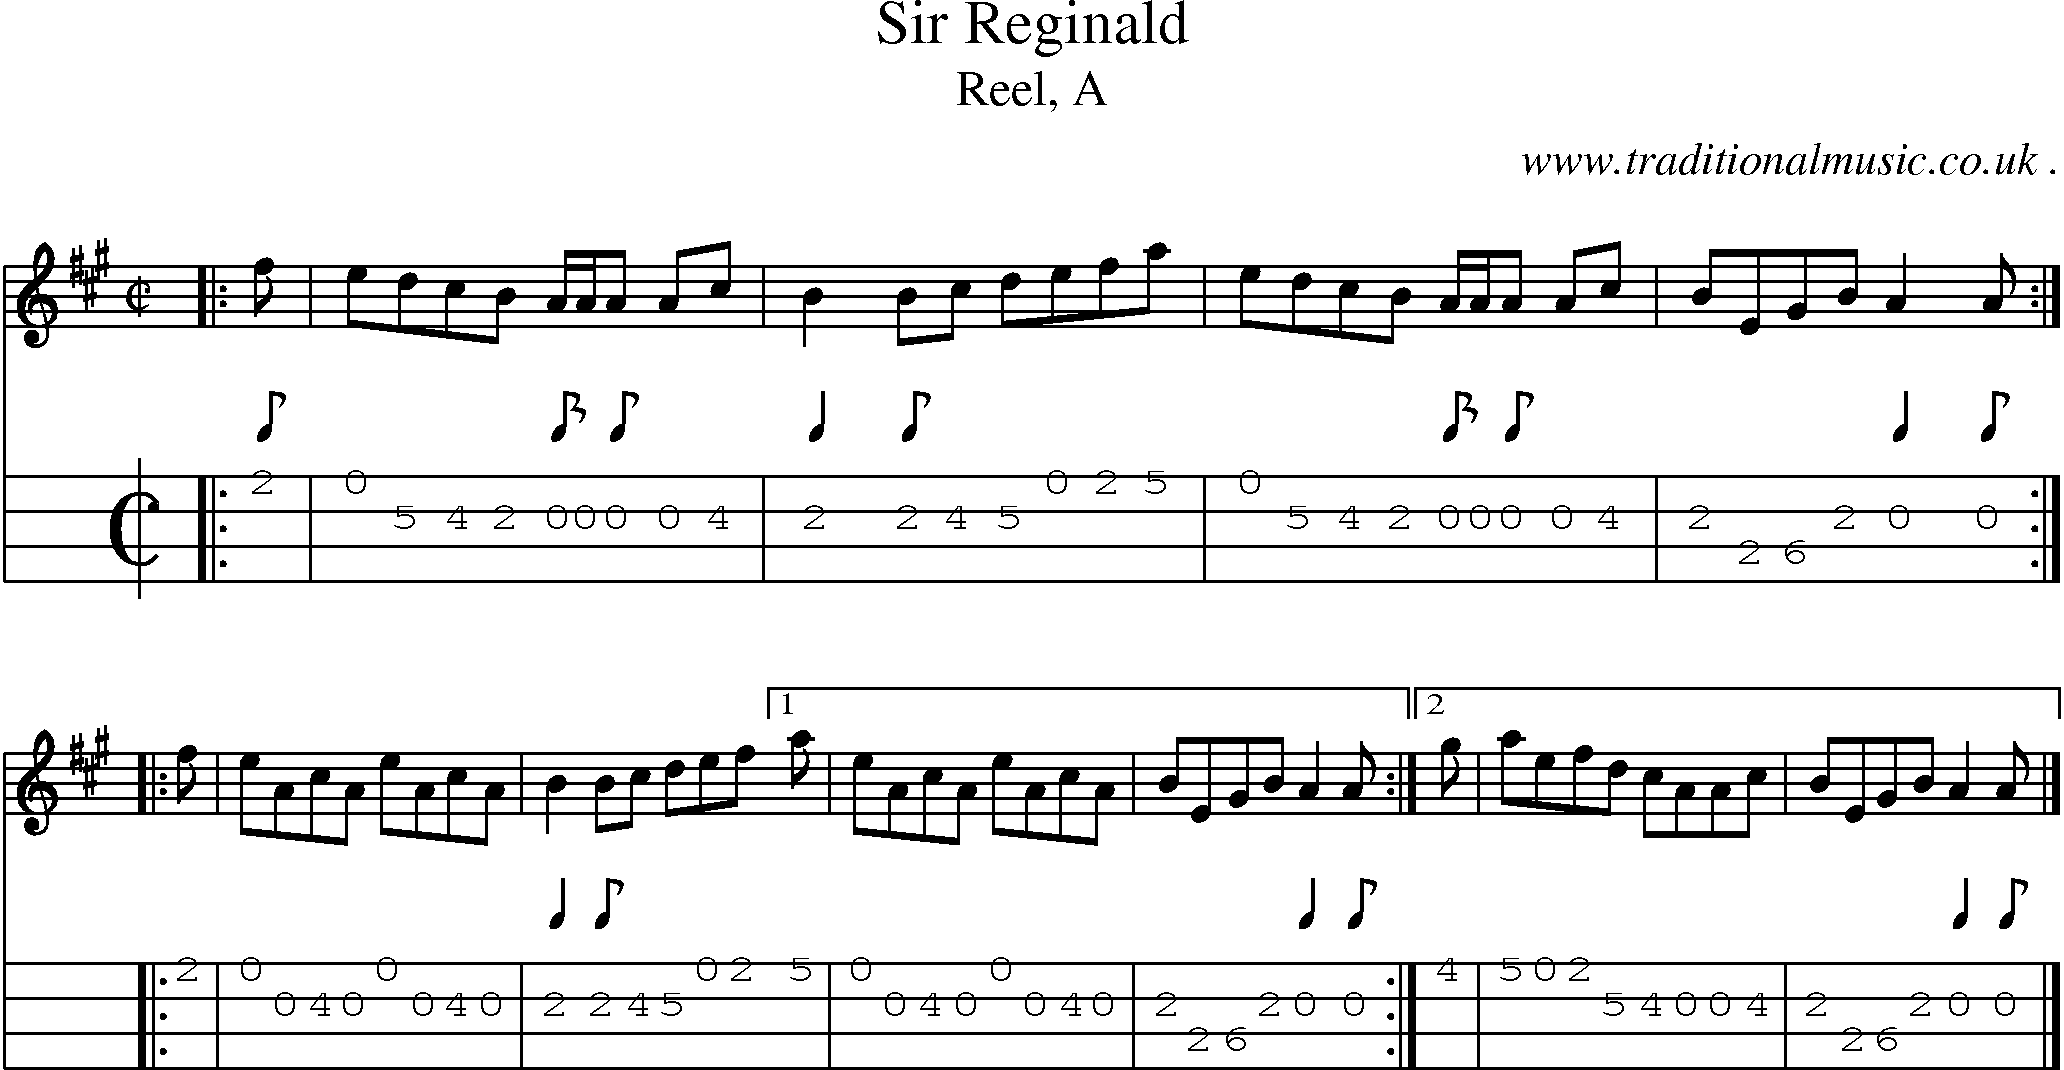 Sheet-music  score, Chords and Mandolin Tabs for Sir Reginald